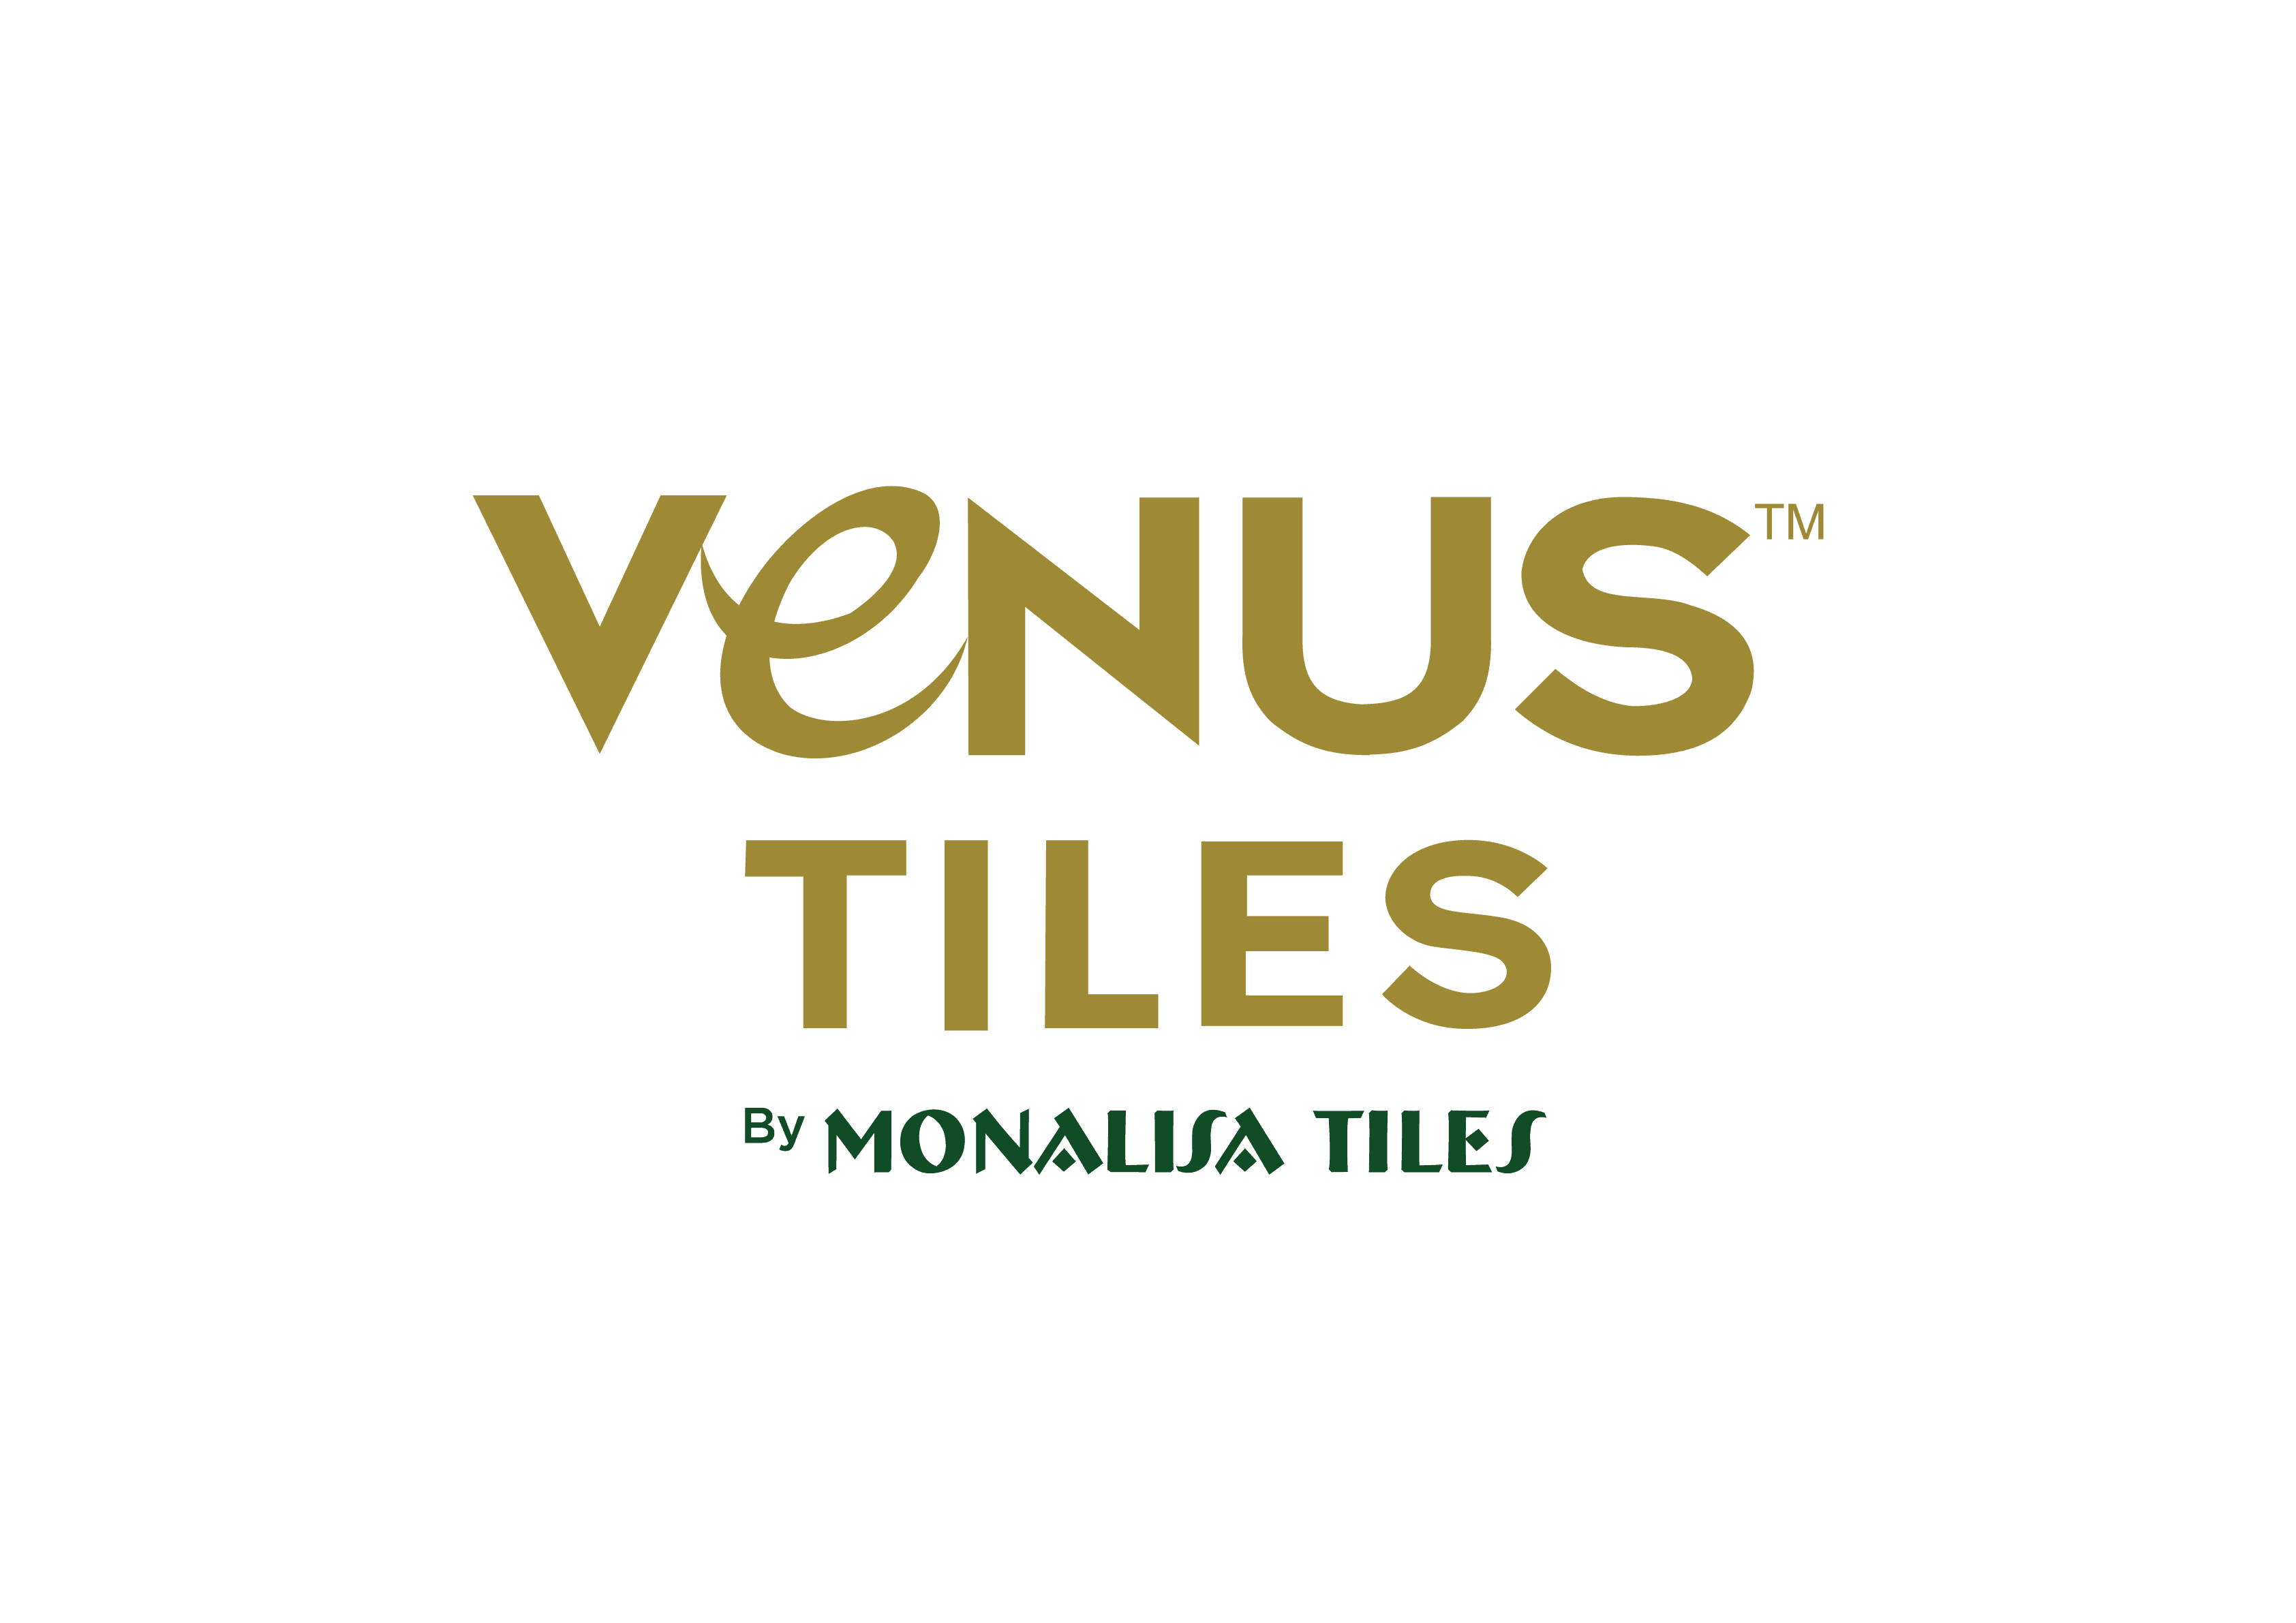 Venus Tiles